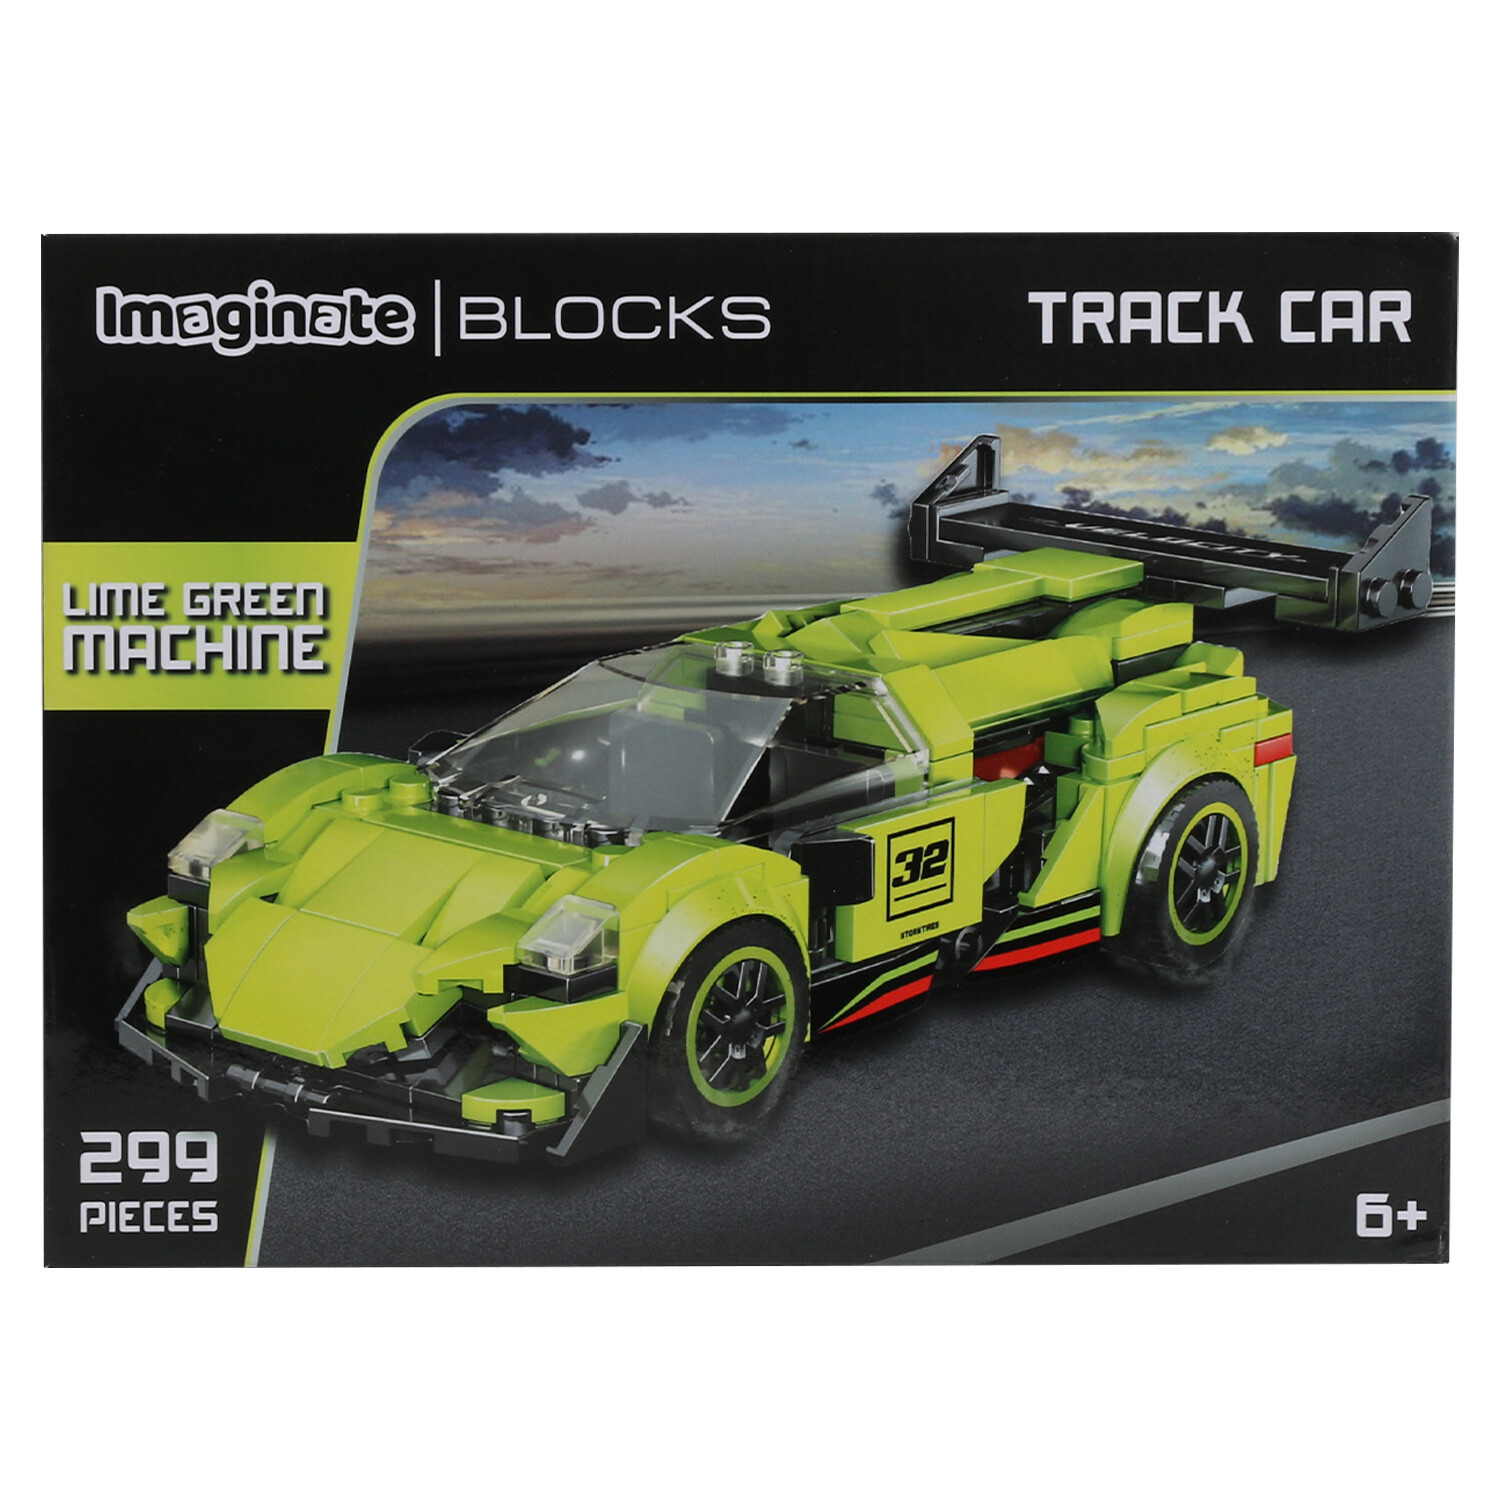 Imaginate Blocks Track Car Image 2